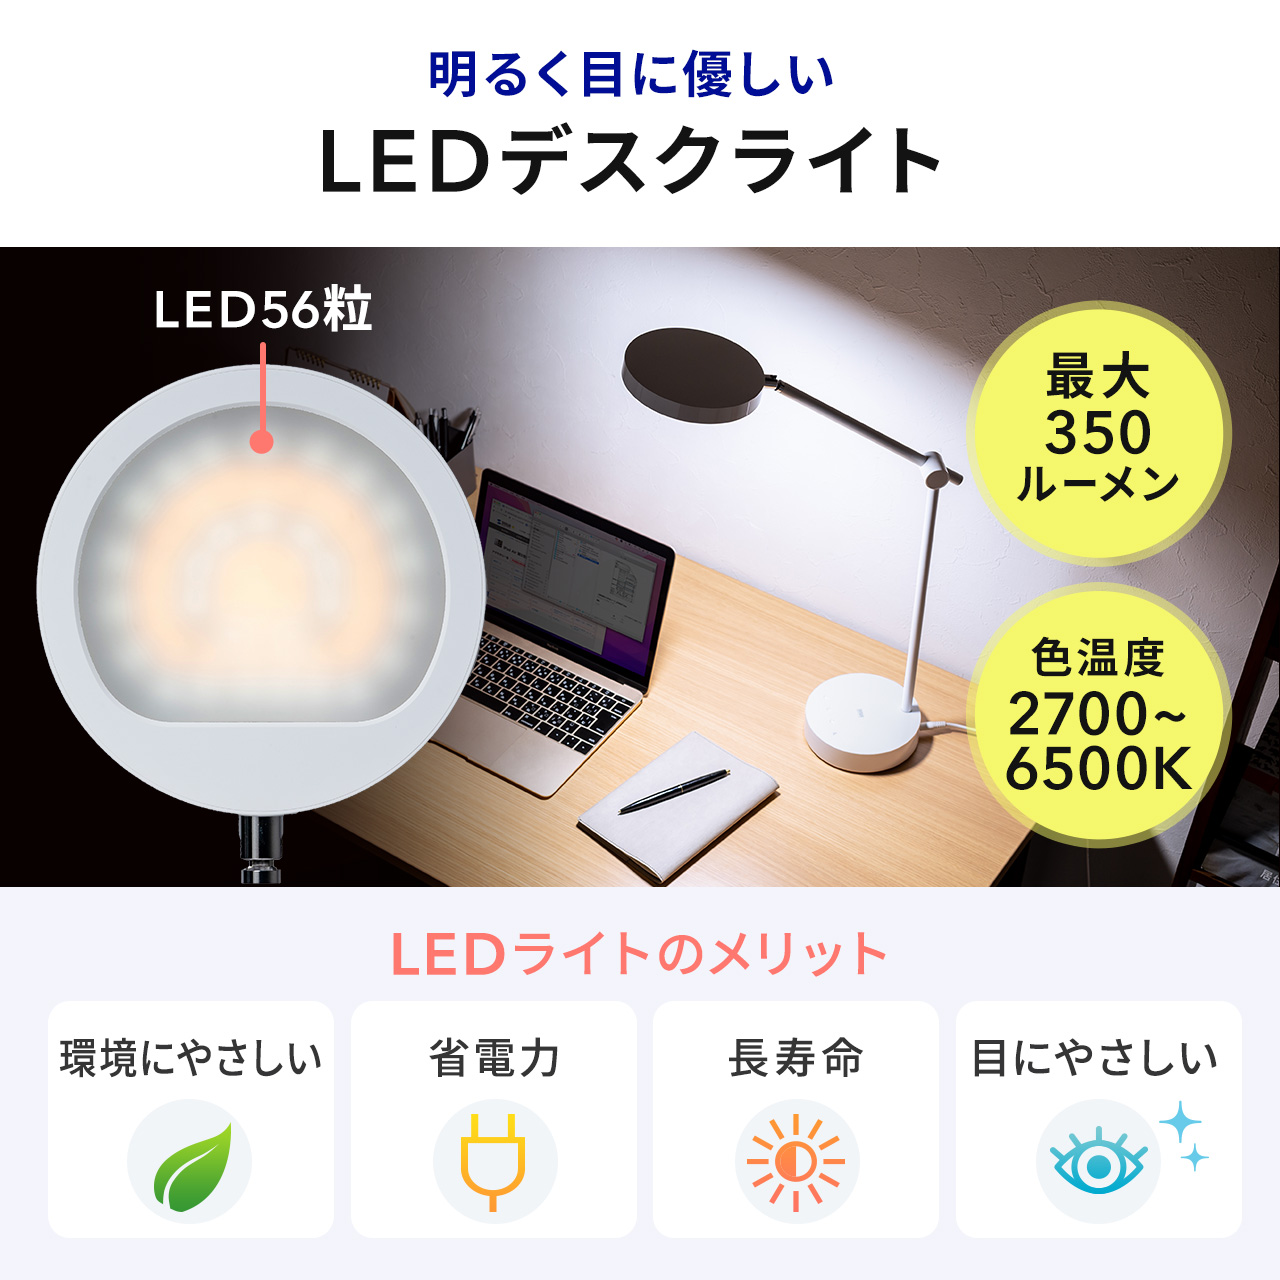 LEDデスクライト ライトスタンド 置き型 丸形 350ルーメン 色温度 明るさ変更対応 アーム式 自撮り 女優ライト 800-LED061